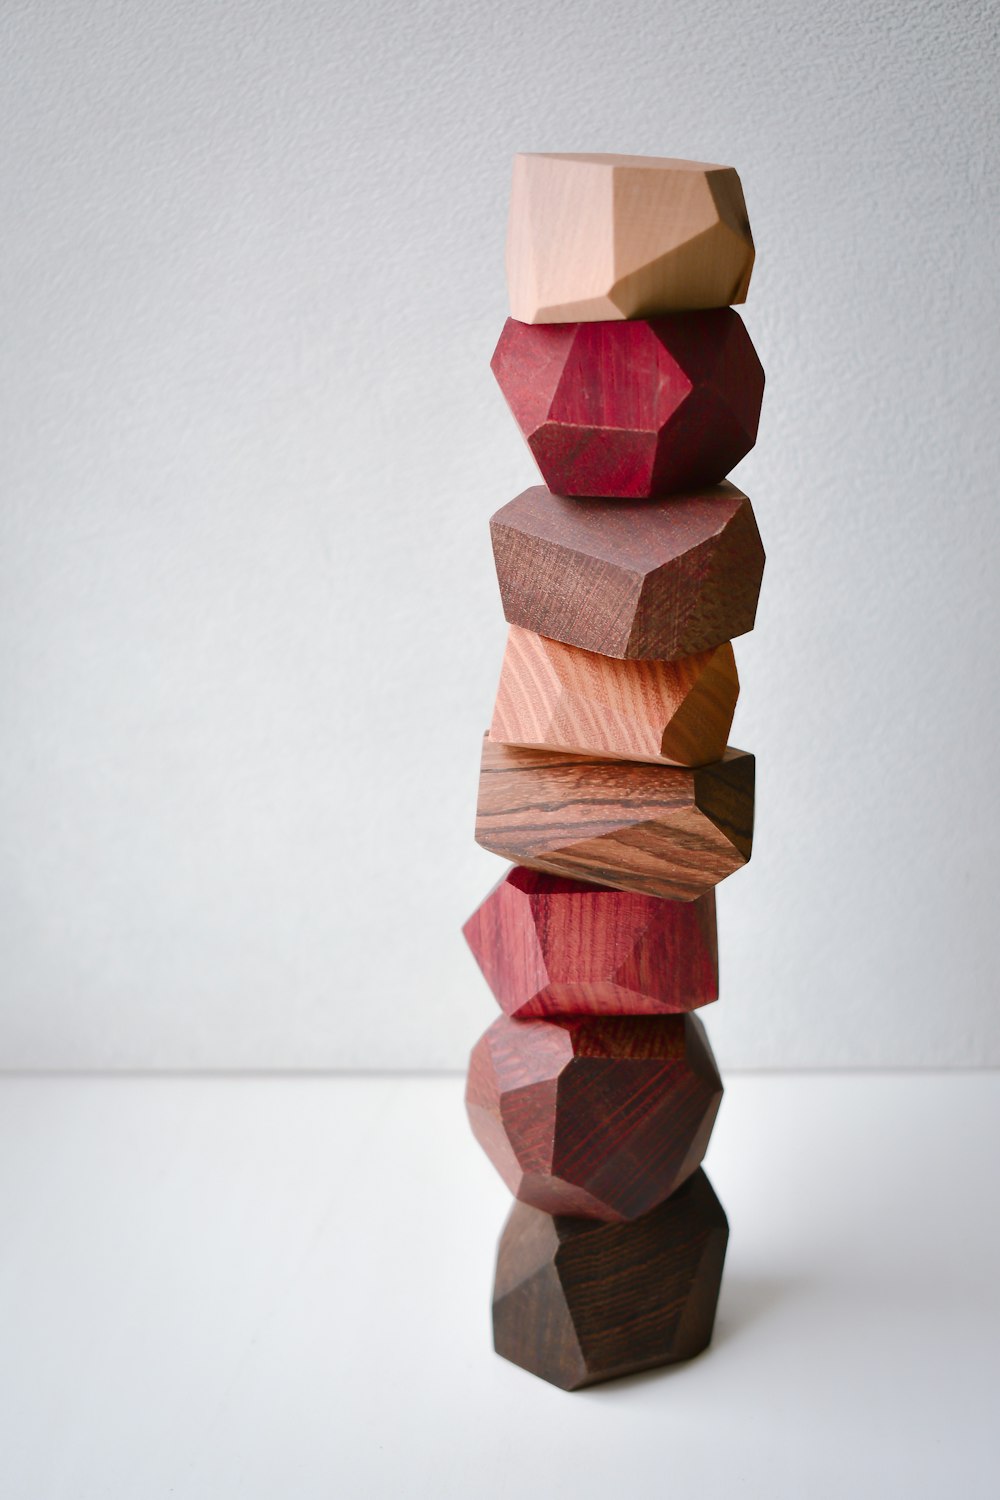 wooden balance stone